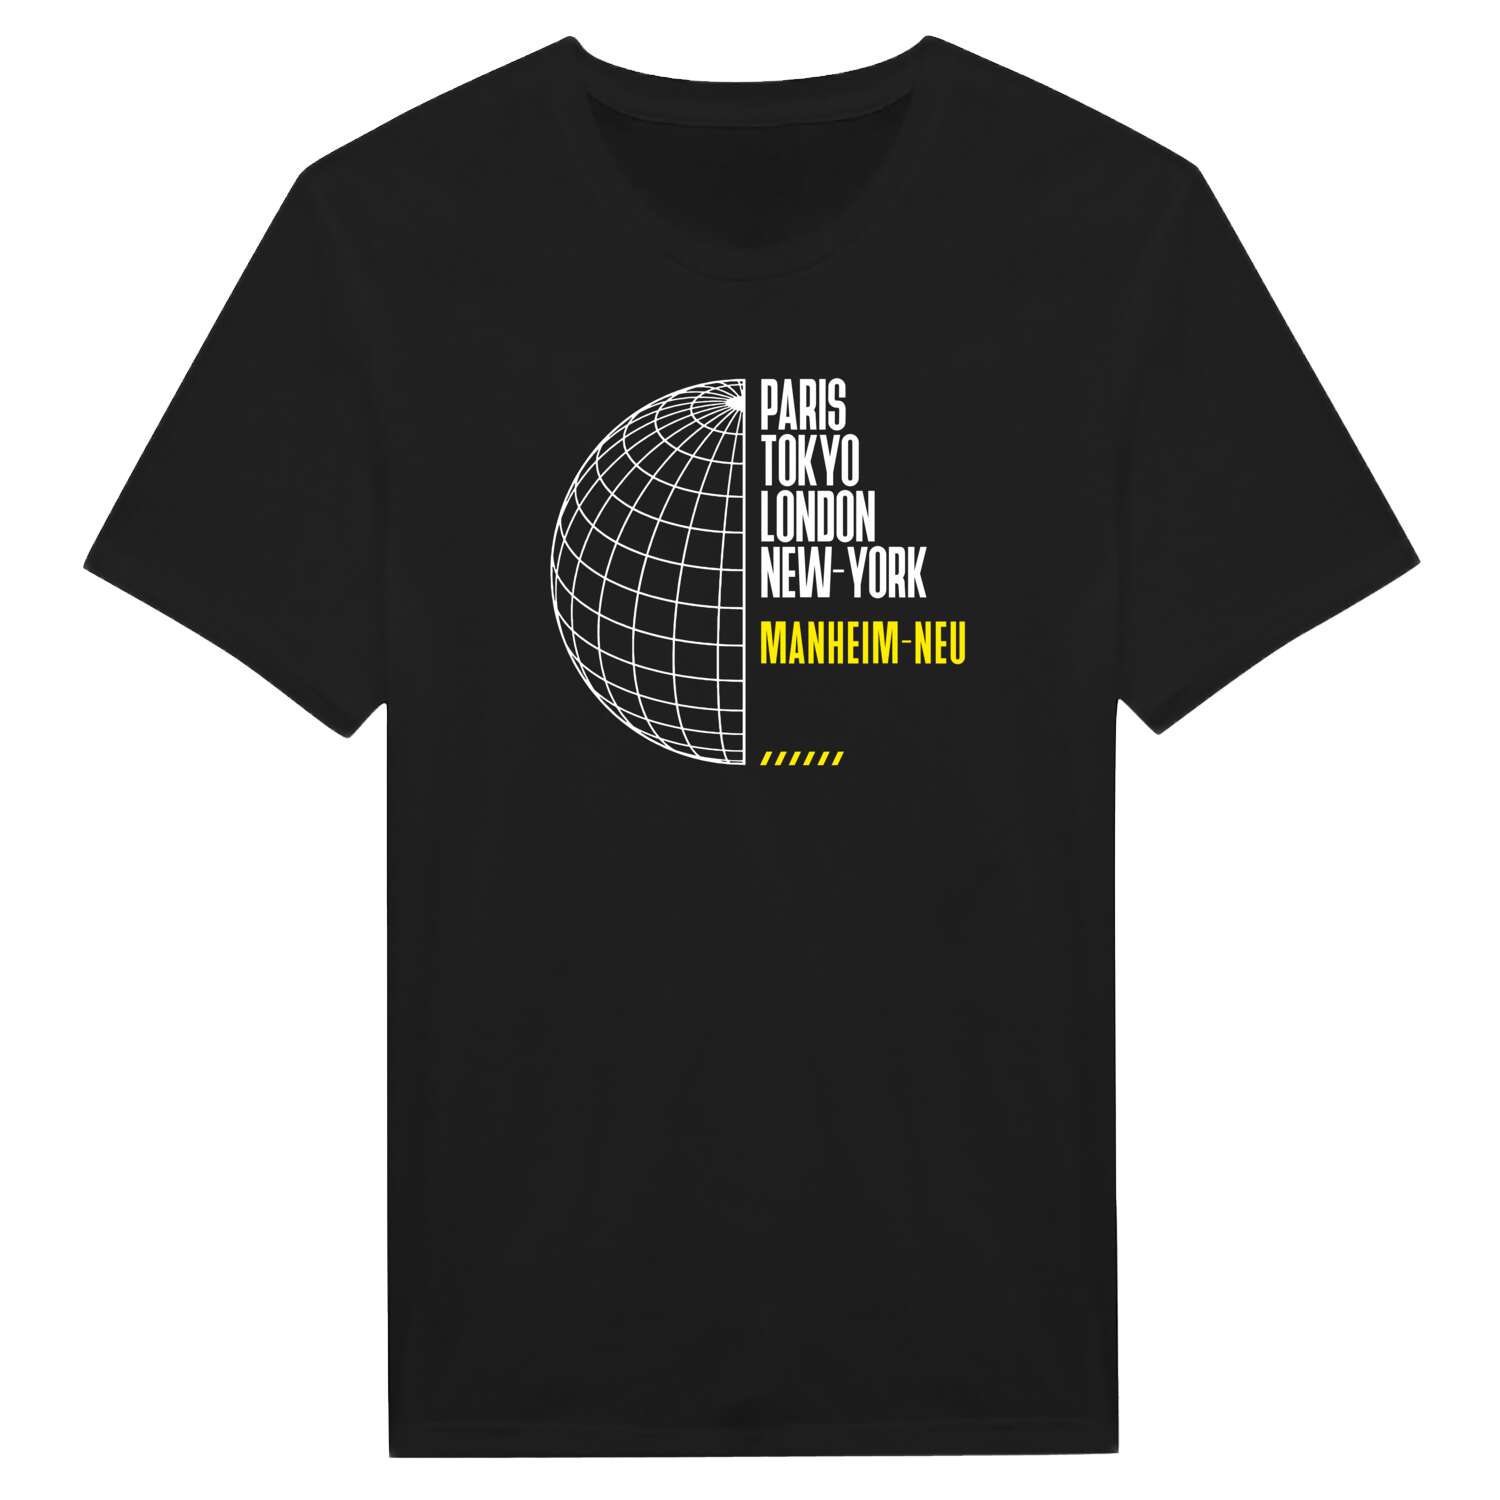 Manheim-neu T-Shirt »Paris Tokyo London«